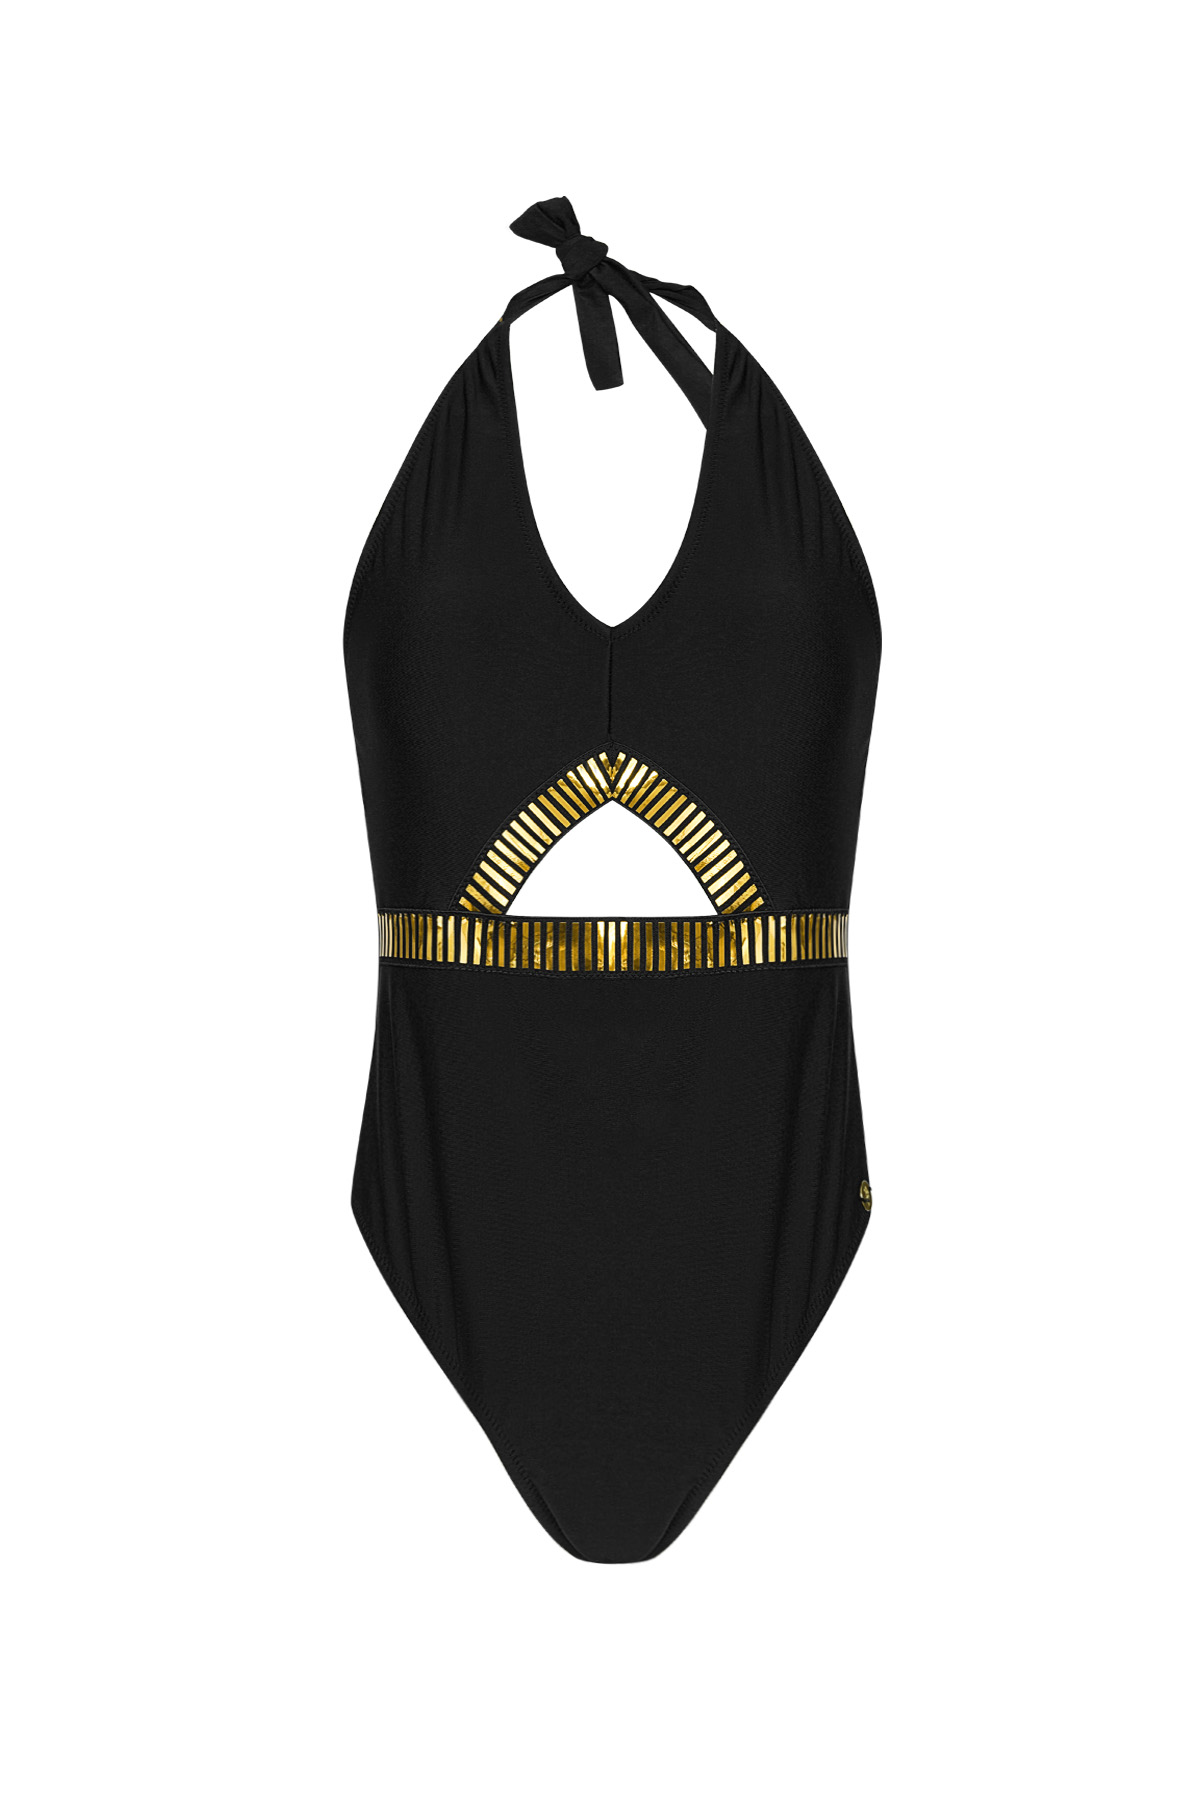 Swimsuit gold stripes - black S h5 